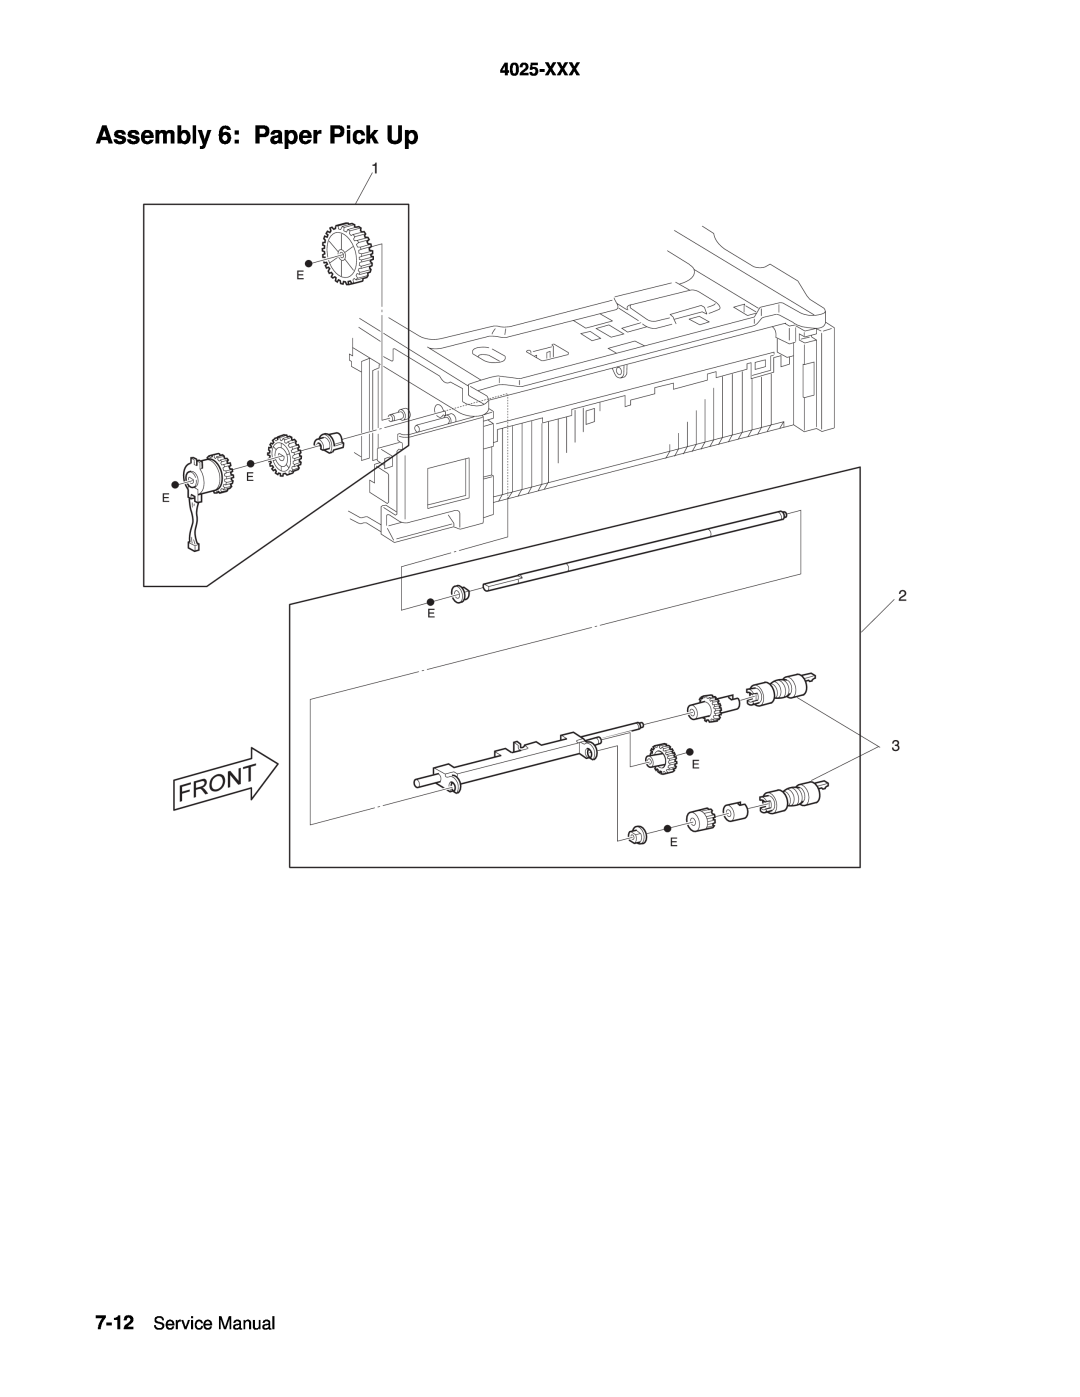 Lexmark W820 service manual Assembly 6 Paper Pick Up, 4025-XXX 